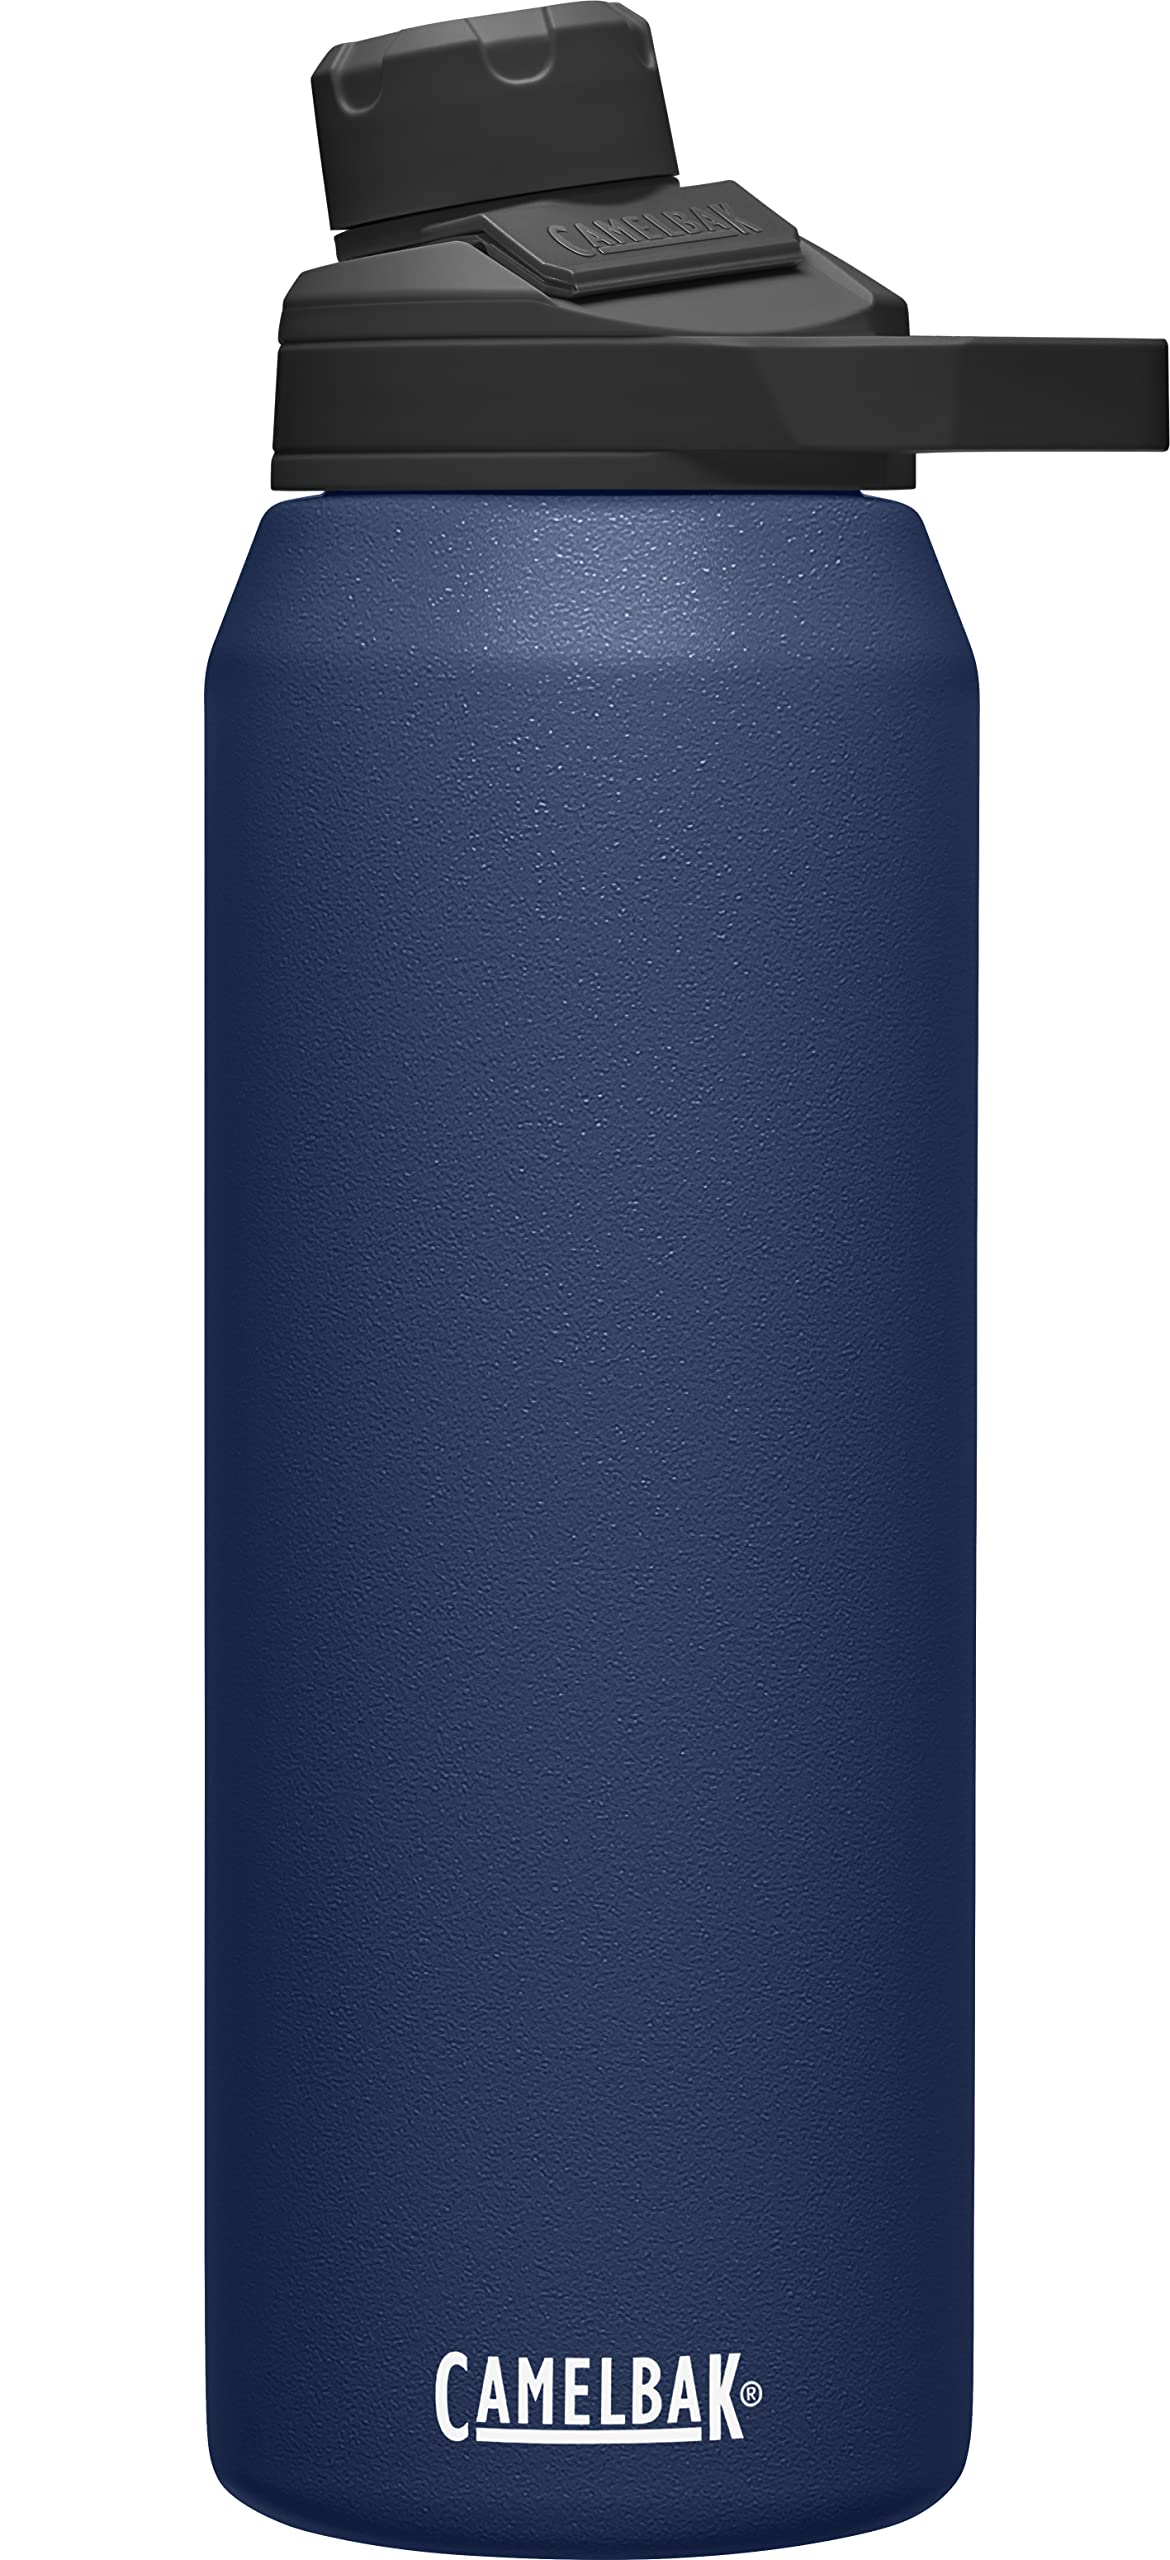 Camelbak Chute Mag Sst Vacuum Insulated Bottles - Navy, 1L/ 32 oz